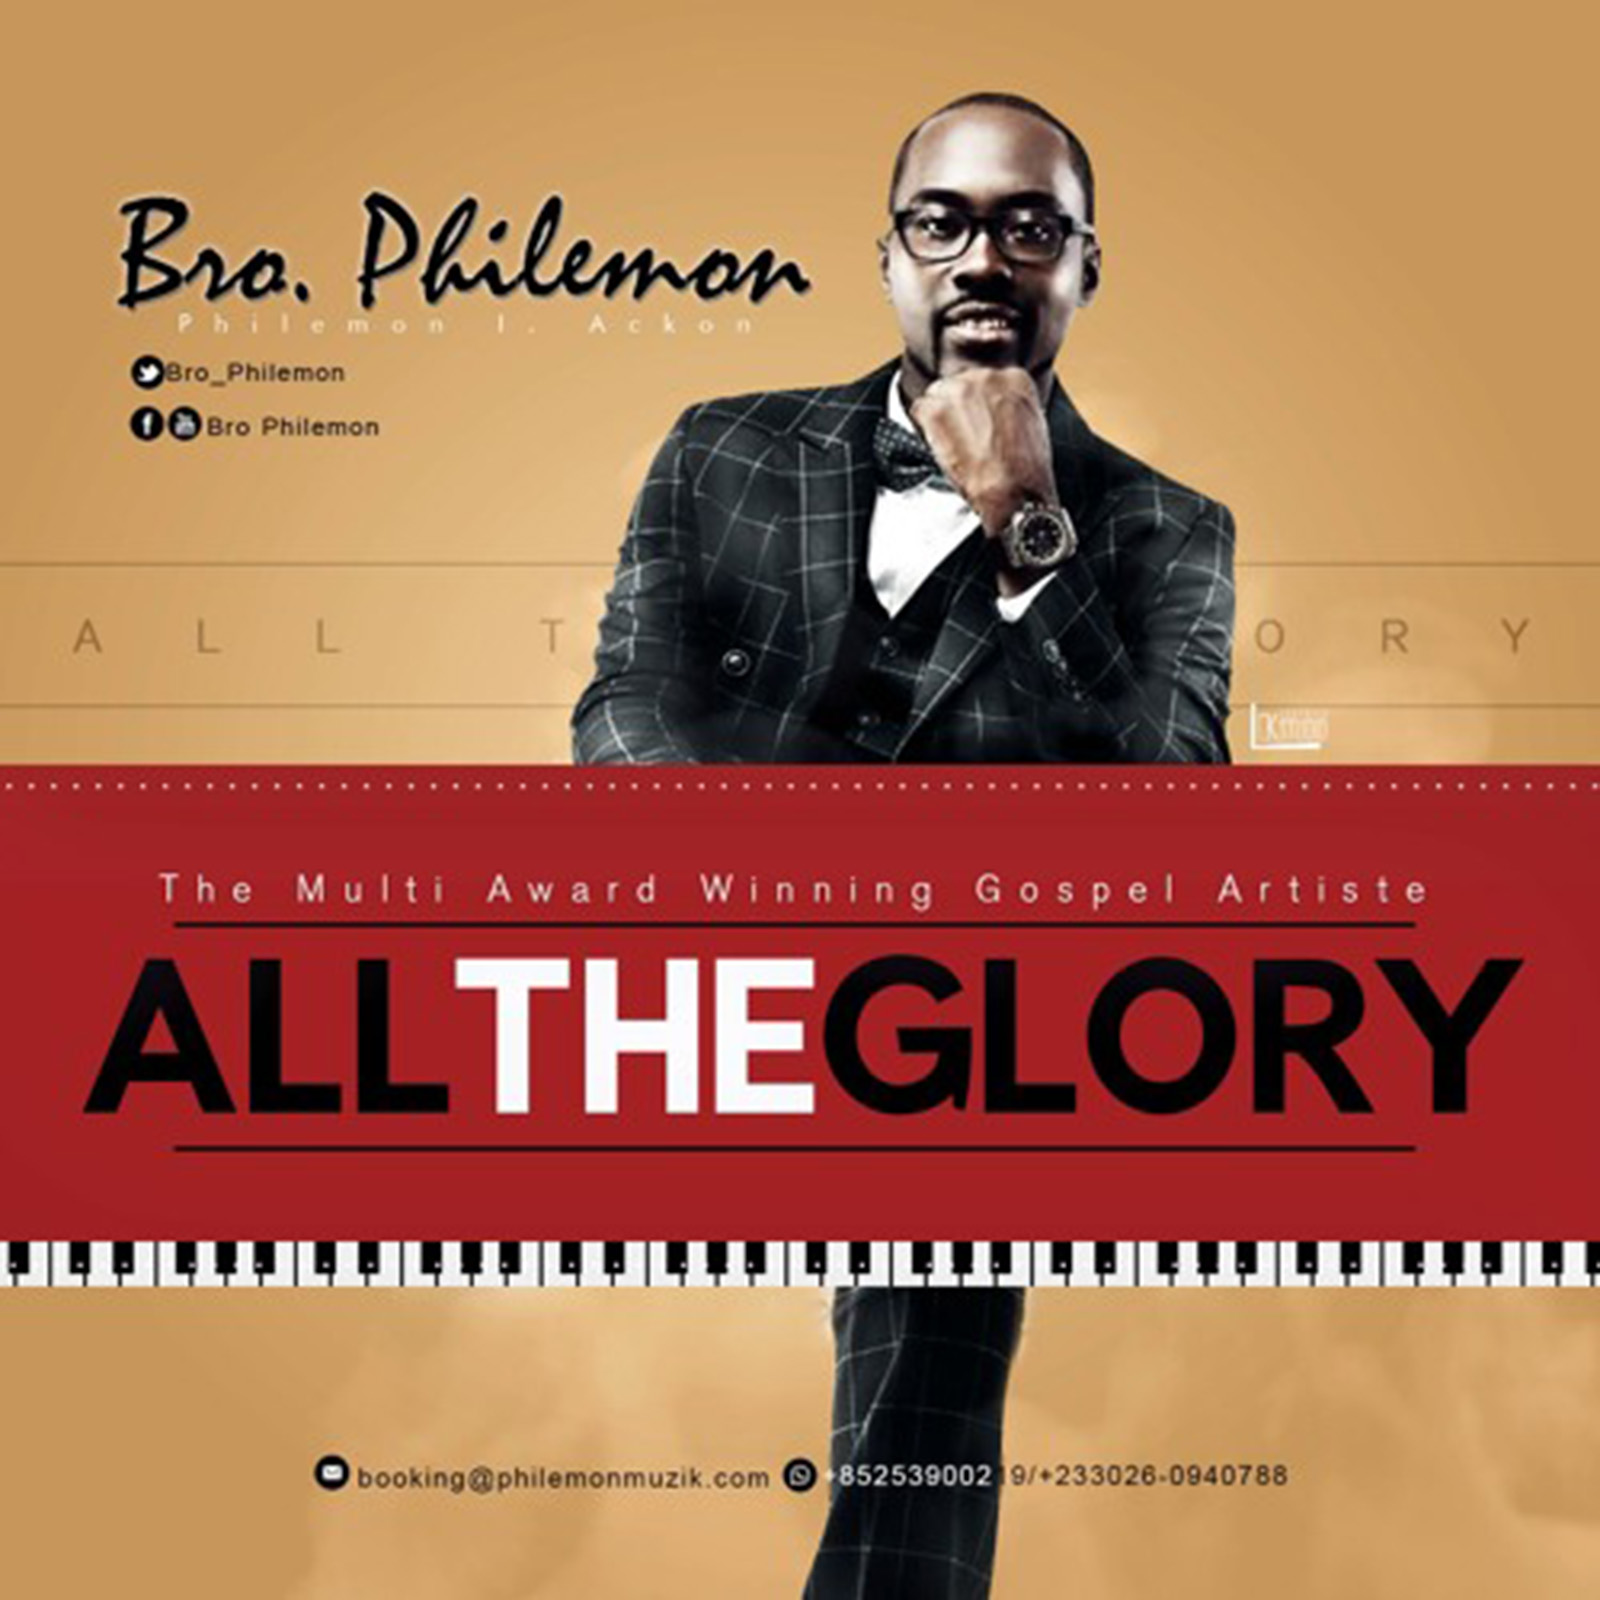 All The Glory by Bro. Philemon